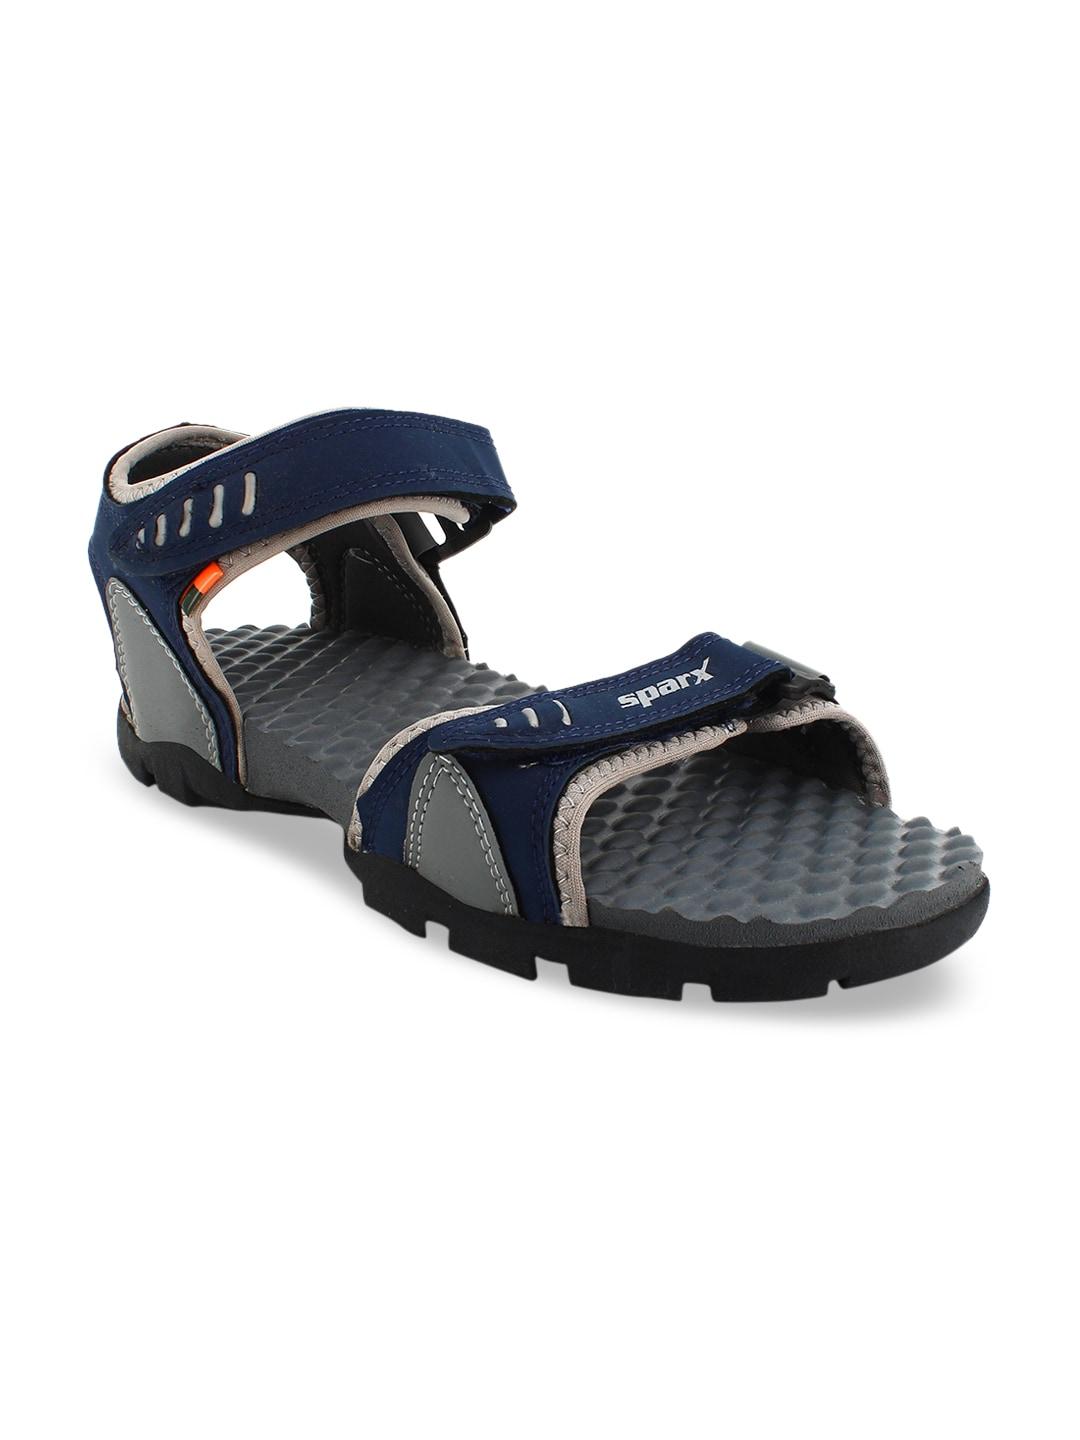 Sparx Men Navy Blue & Grey Solid Leather Sports Sandals